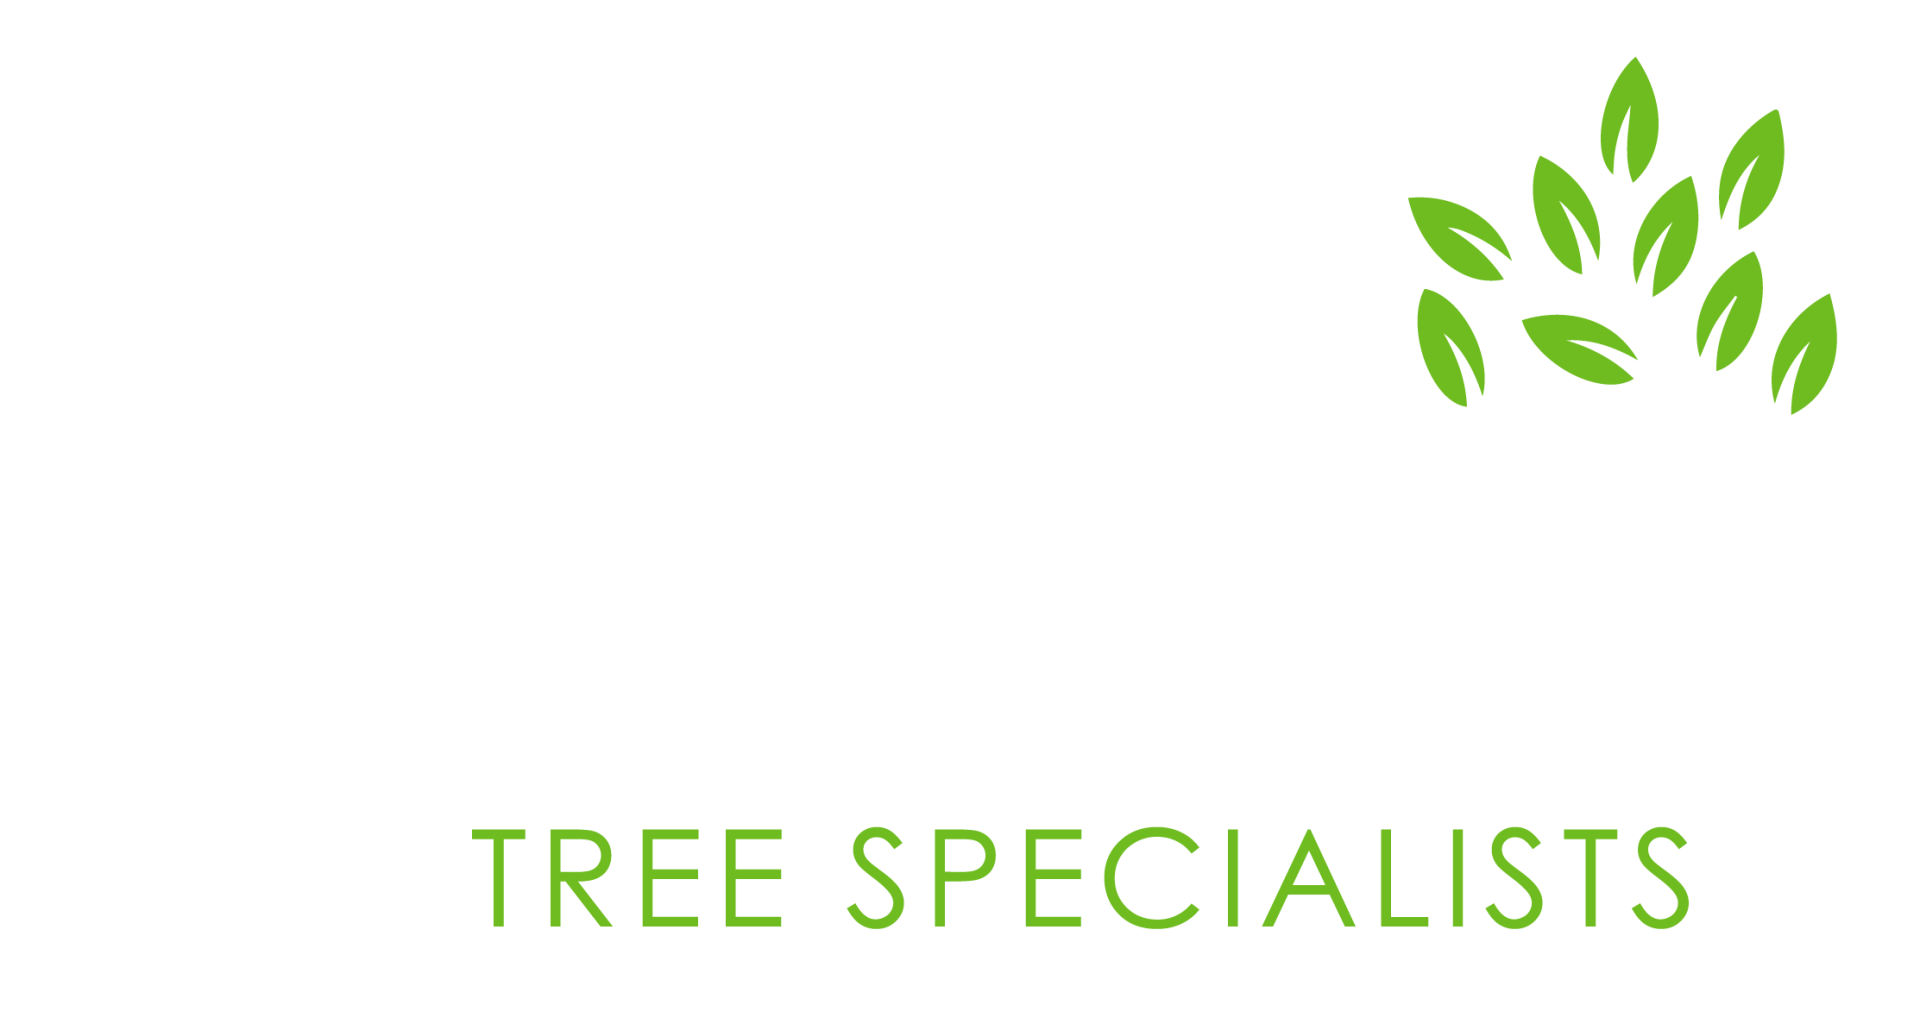 Tree surgeons | Jones Tree Specialists